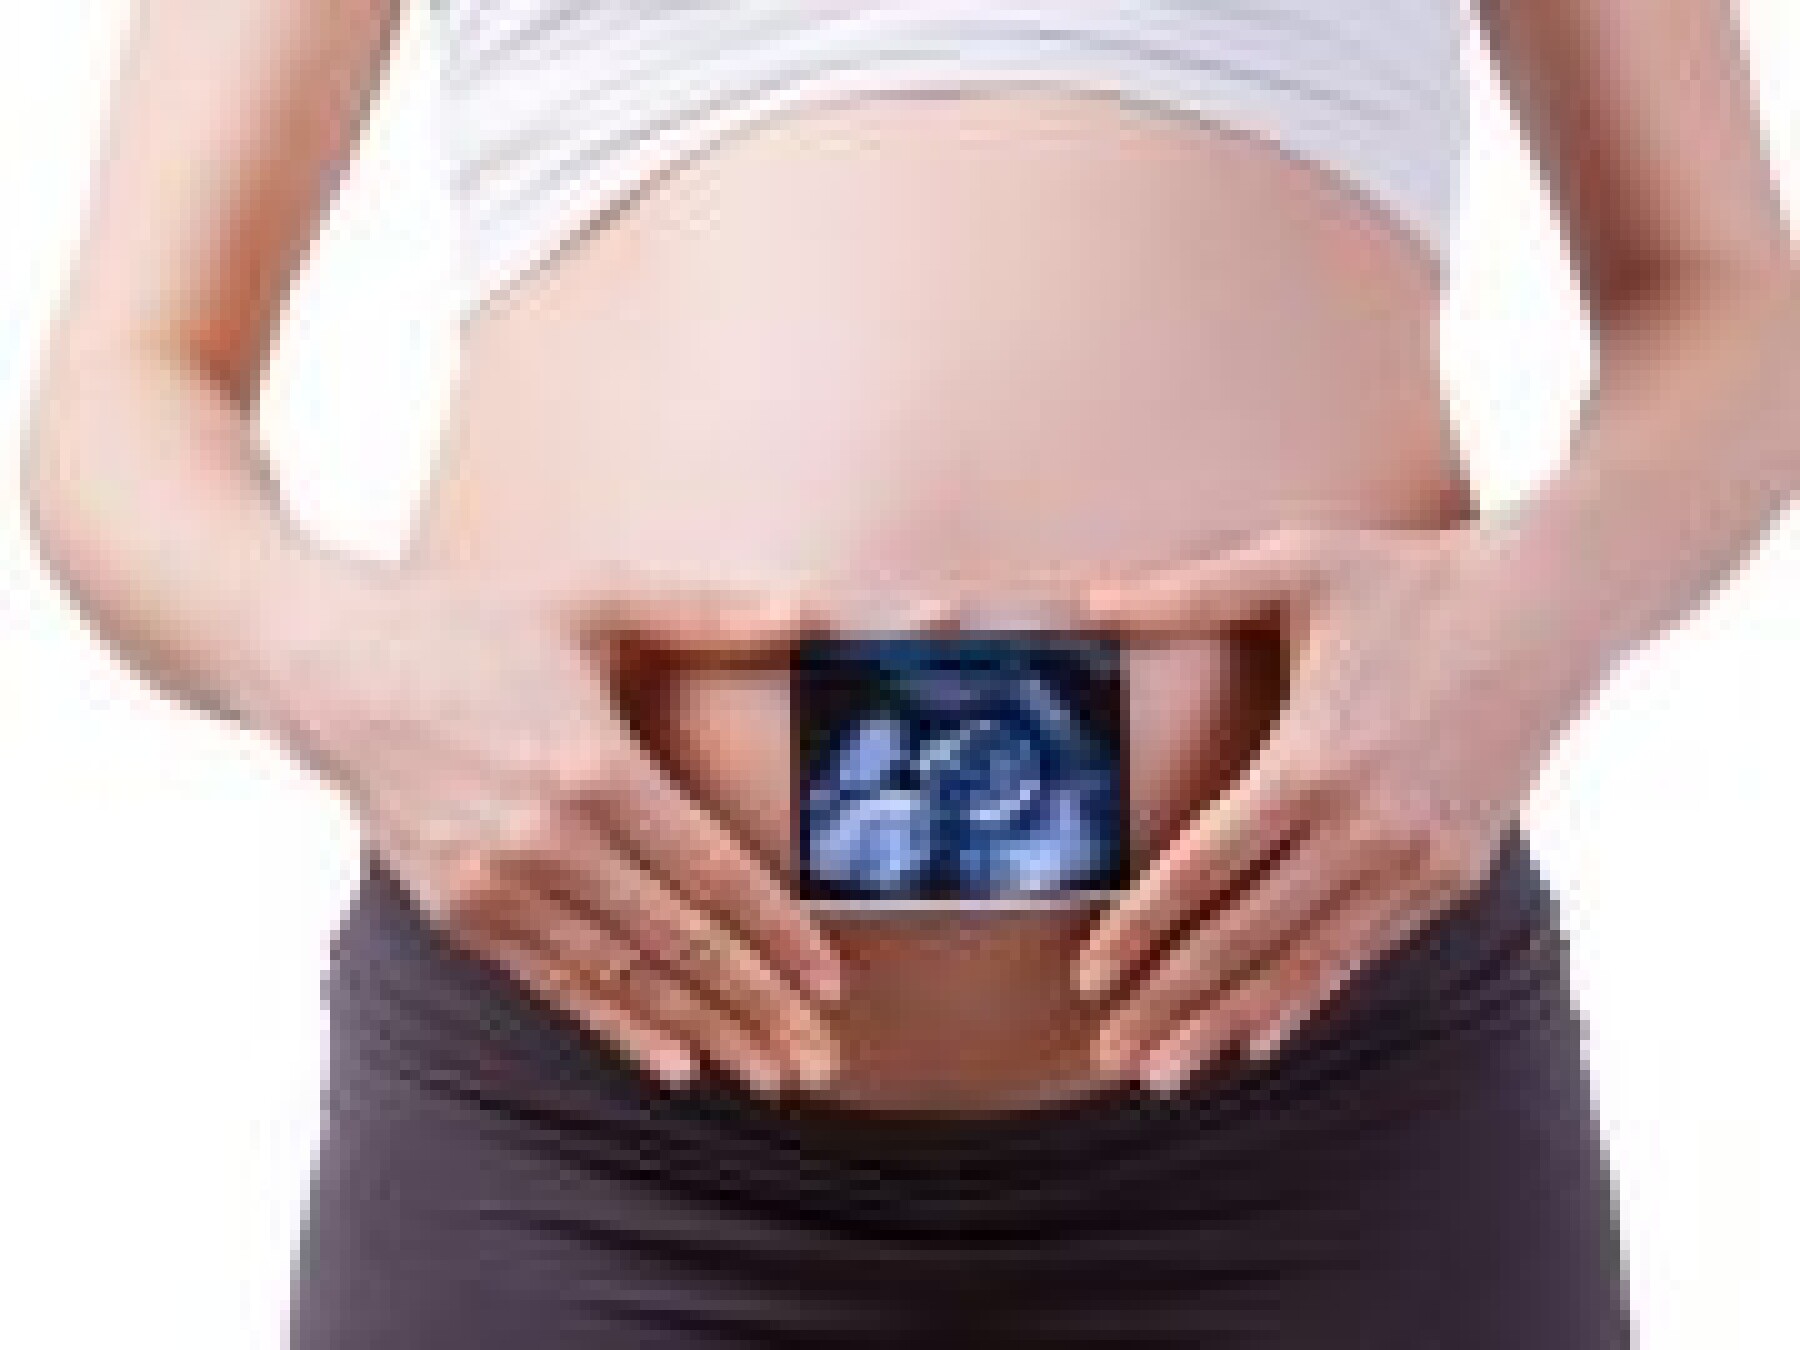 Mois 4 in utero : il s'entraîne à respirer